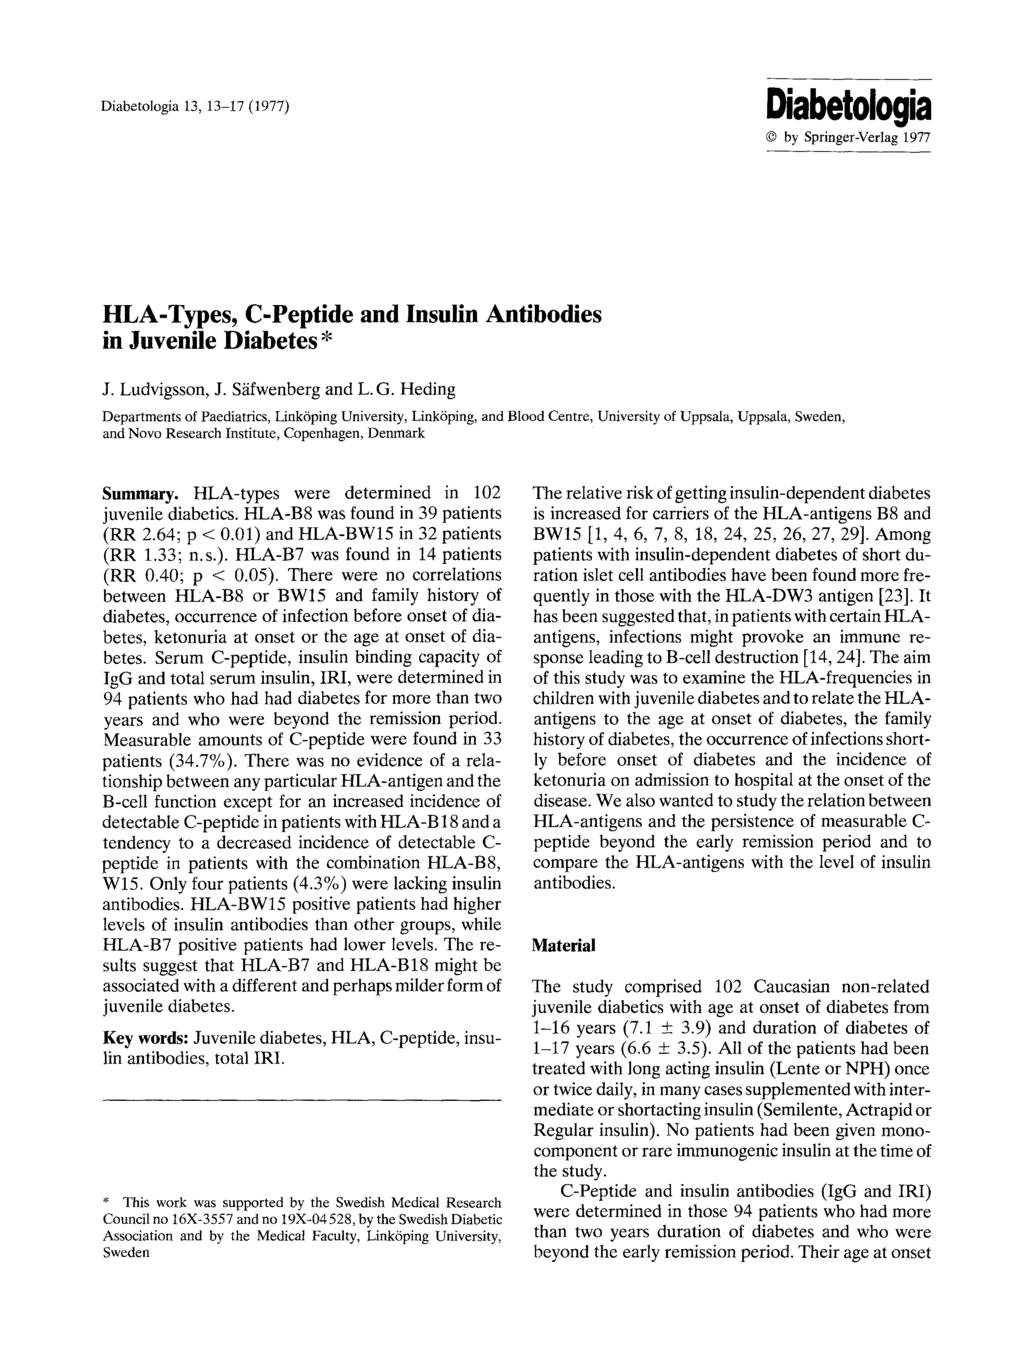 Diabetologia 13, 13-17 (1977) Diabetologia @ by Springer-Verlag 1977 HLA-Types, C-Peptide and Insulin Antibodies in Juvenile Diabetes* J. Ludvigsson, J. S/ifwenberg and L. G.